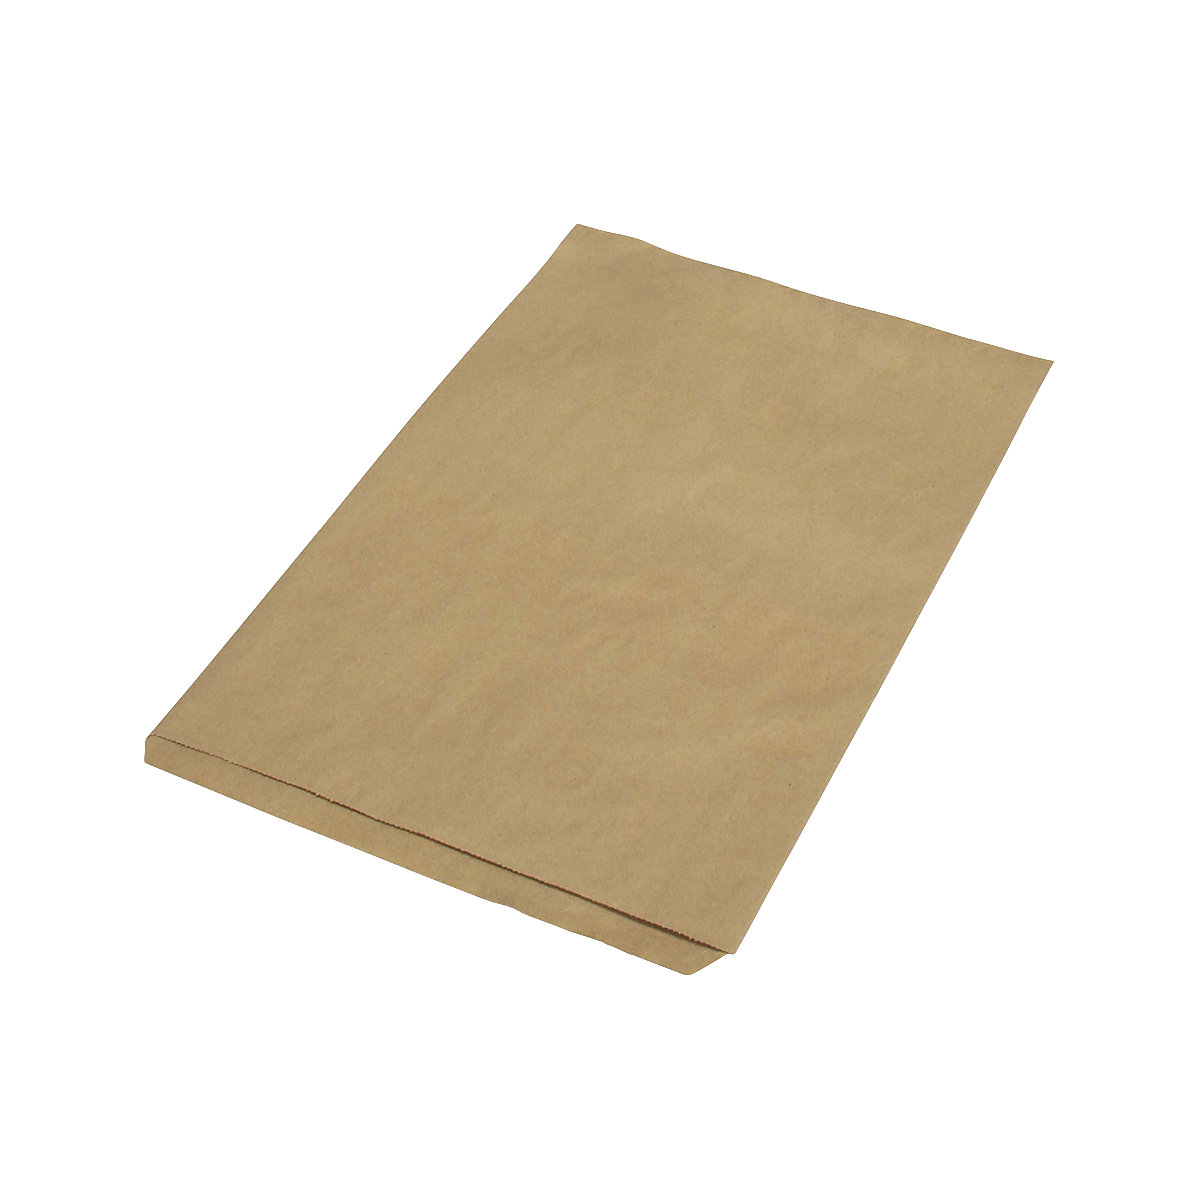 Flachbeutel terra, aus recyceltem Papier, LxB 350 x 230 mm, VE 1000 Stk, ab 10 VE-2